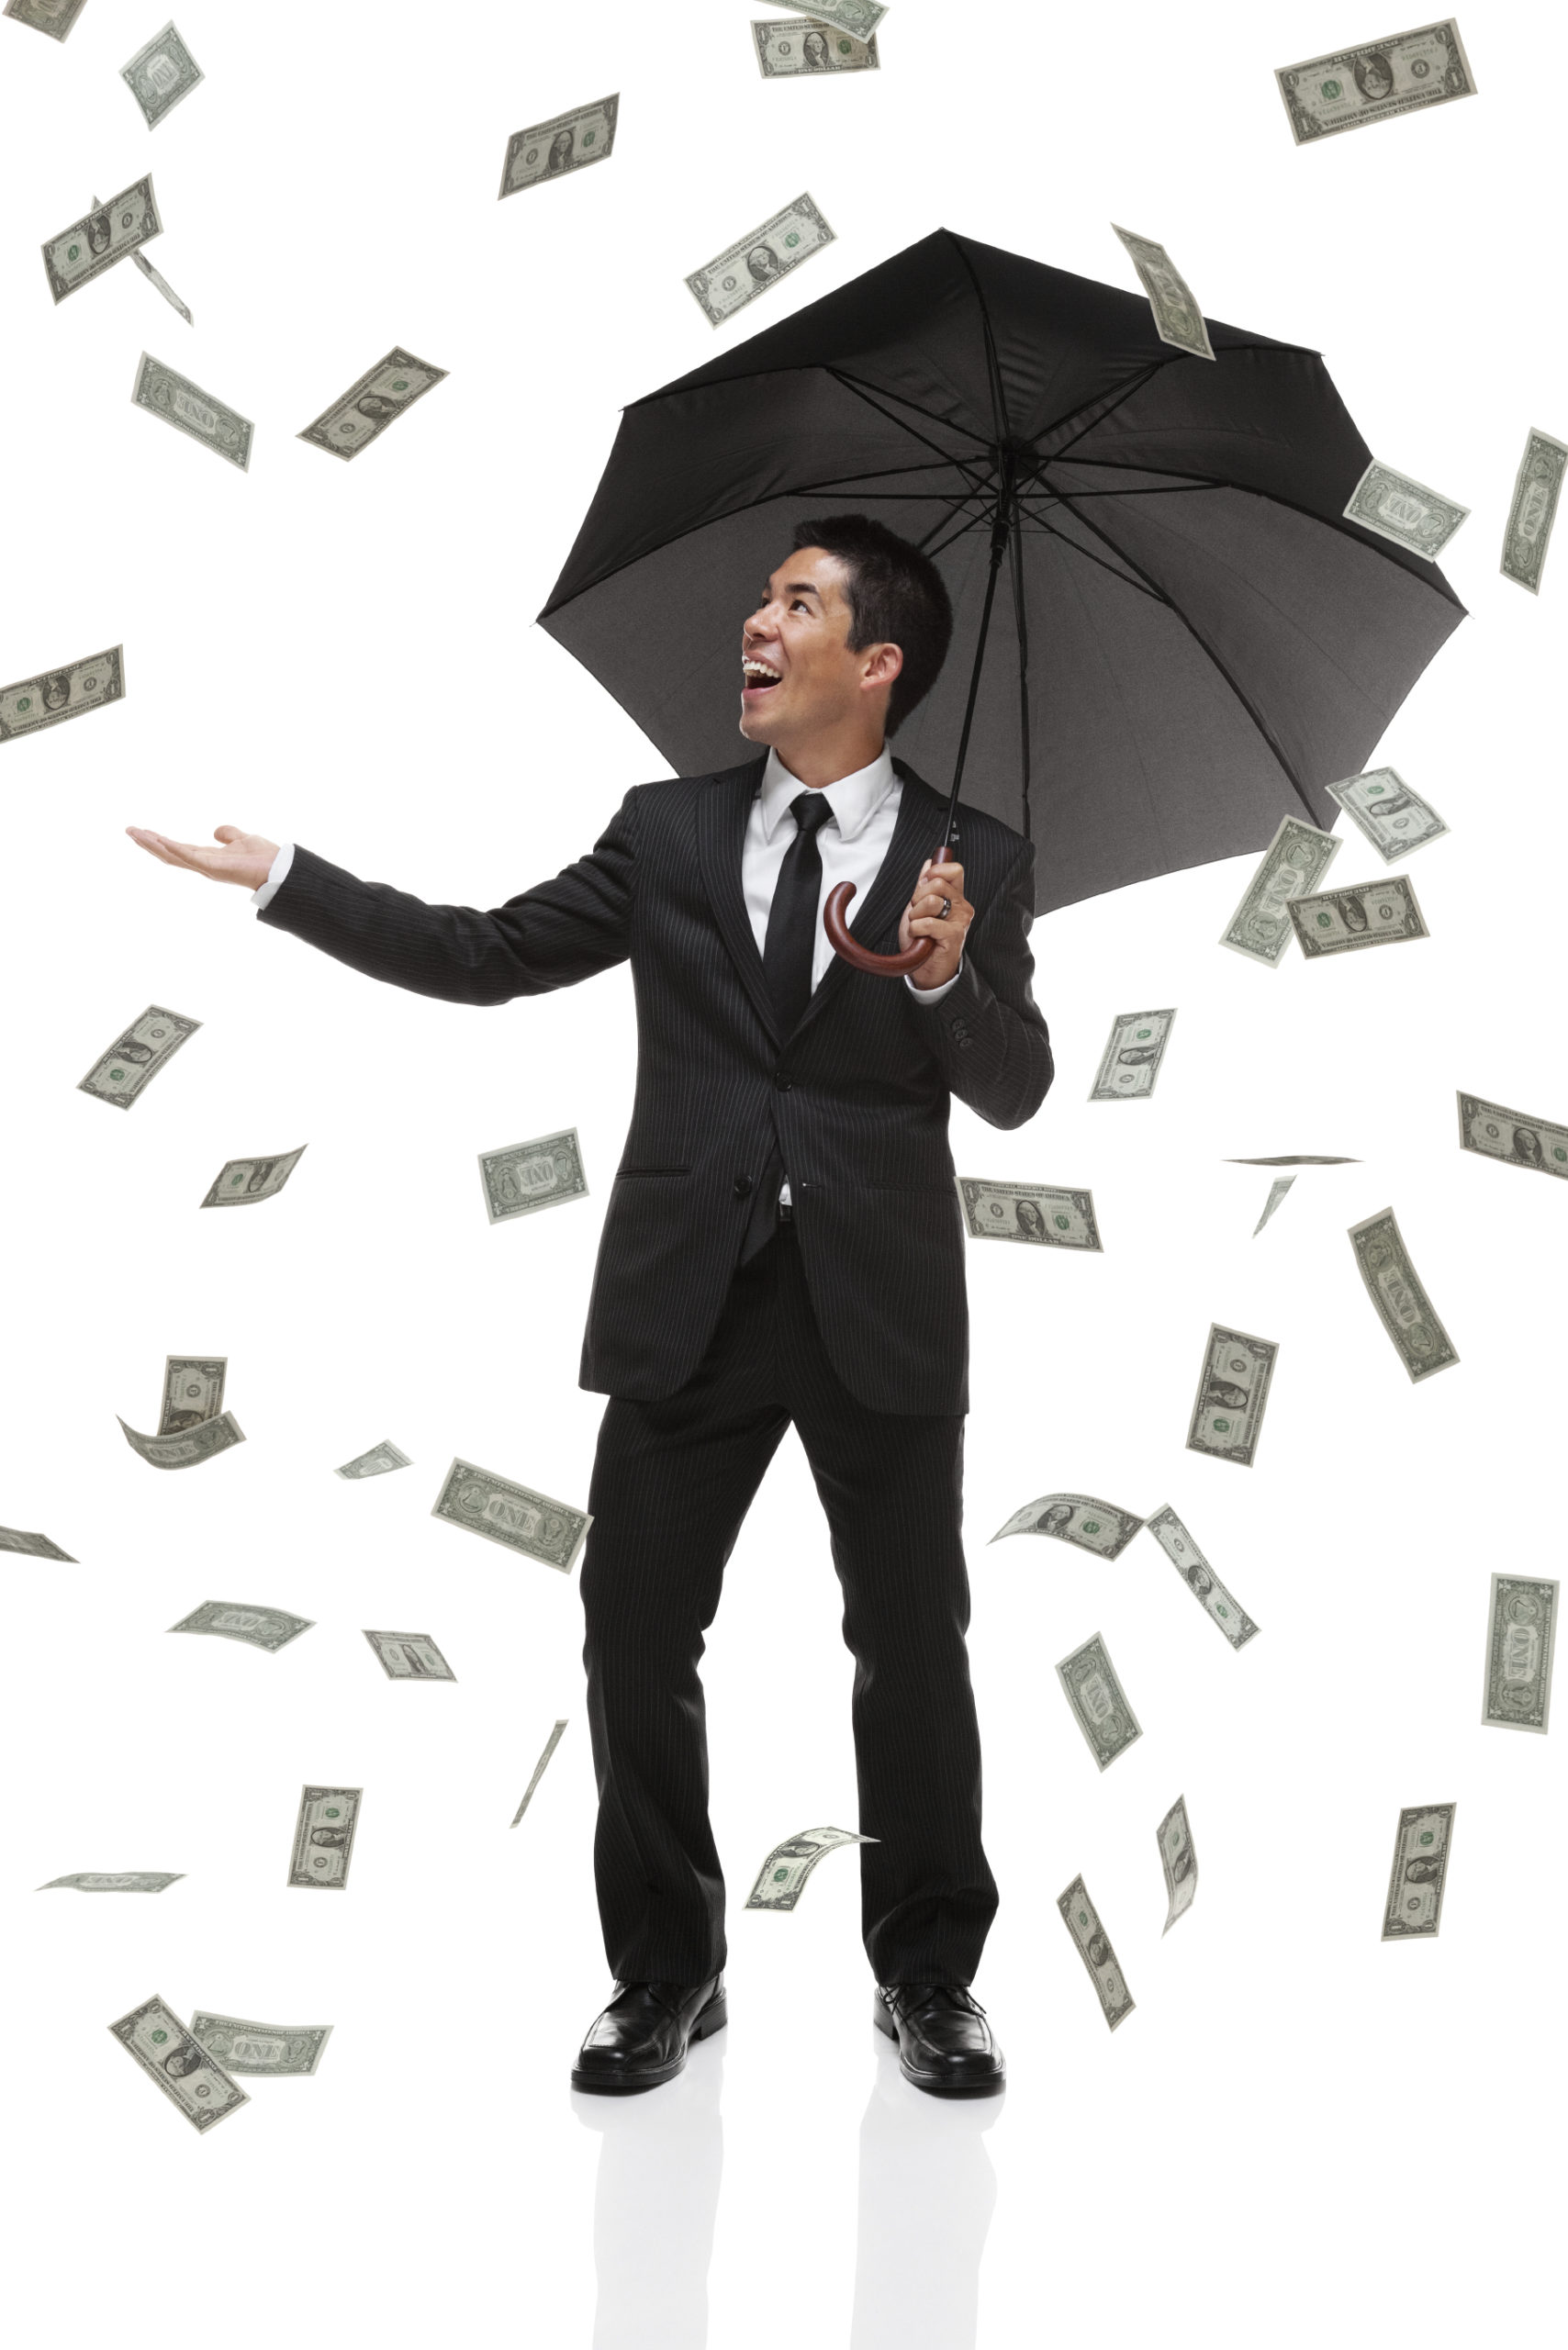 Raingin money on a buisiness man with an umbrella